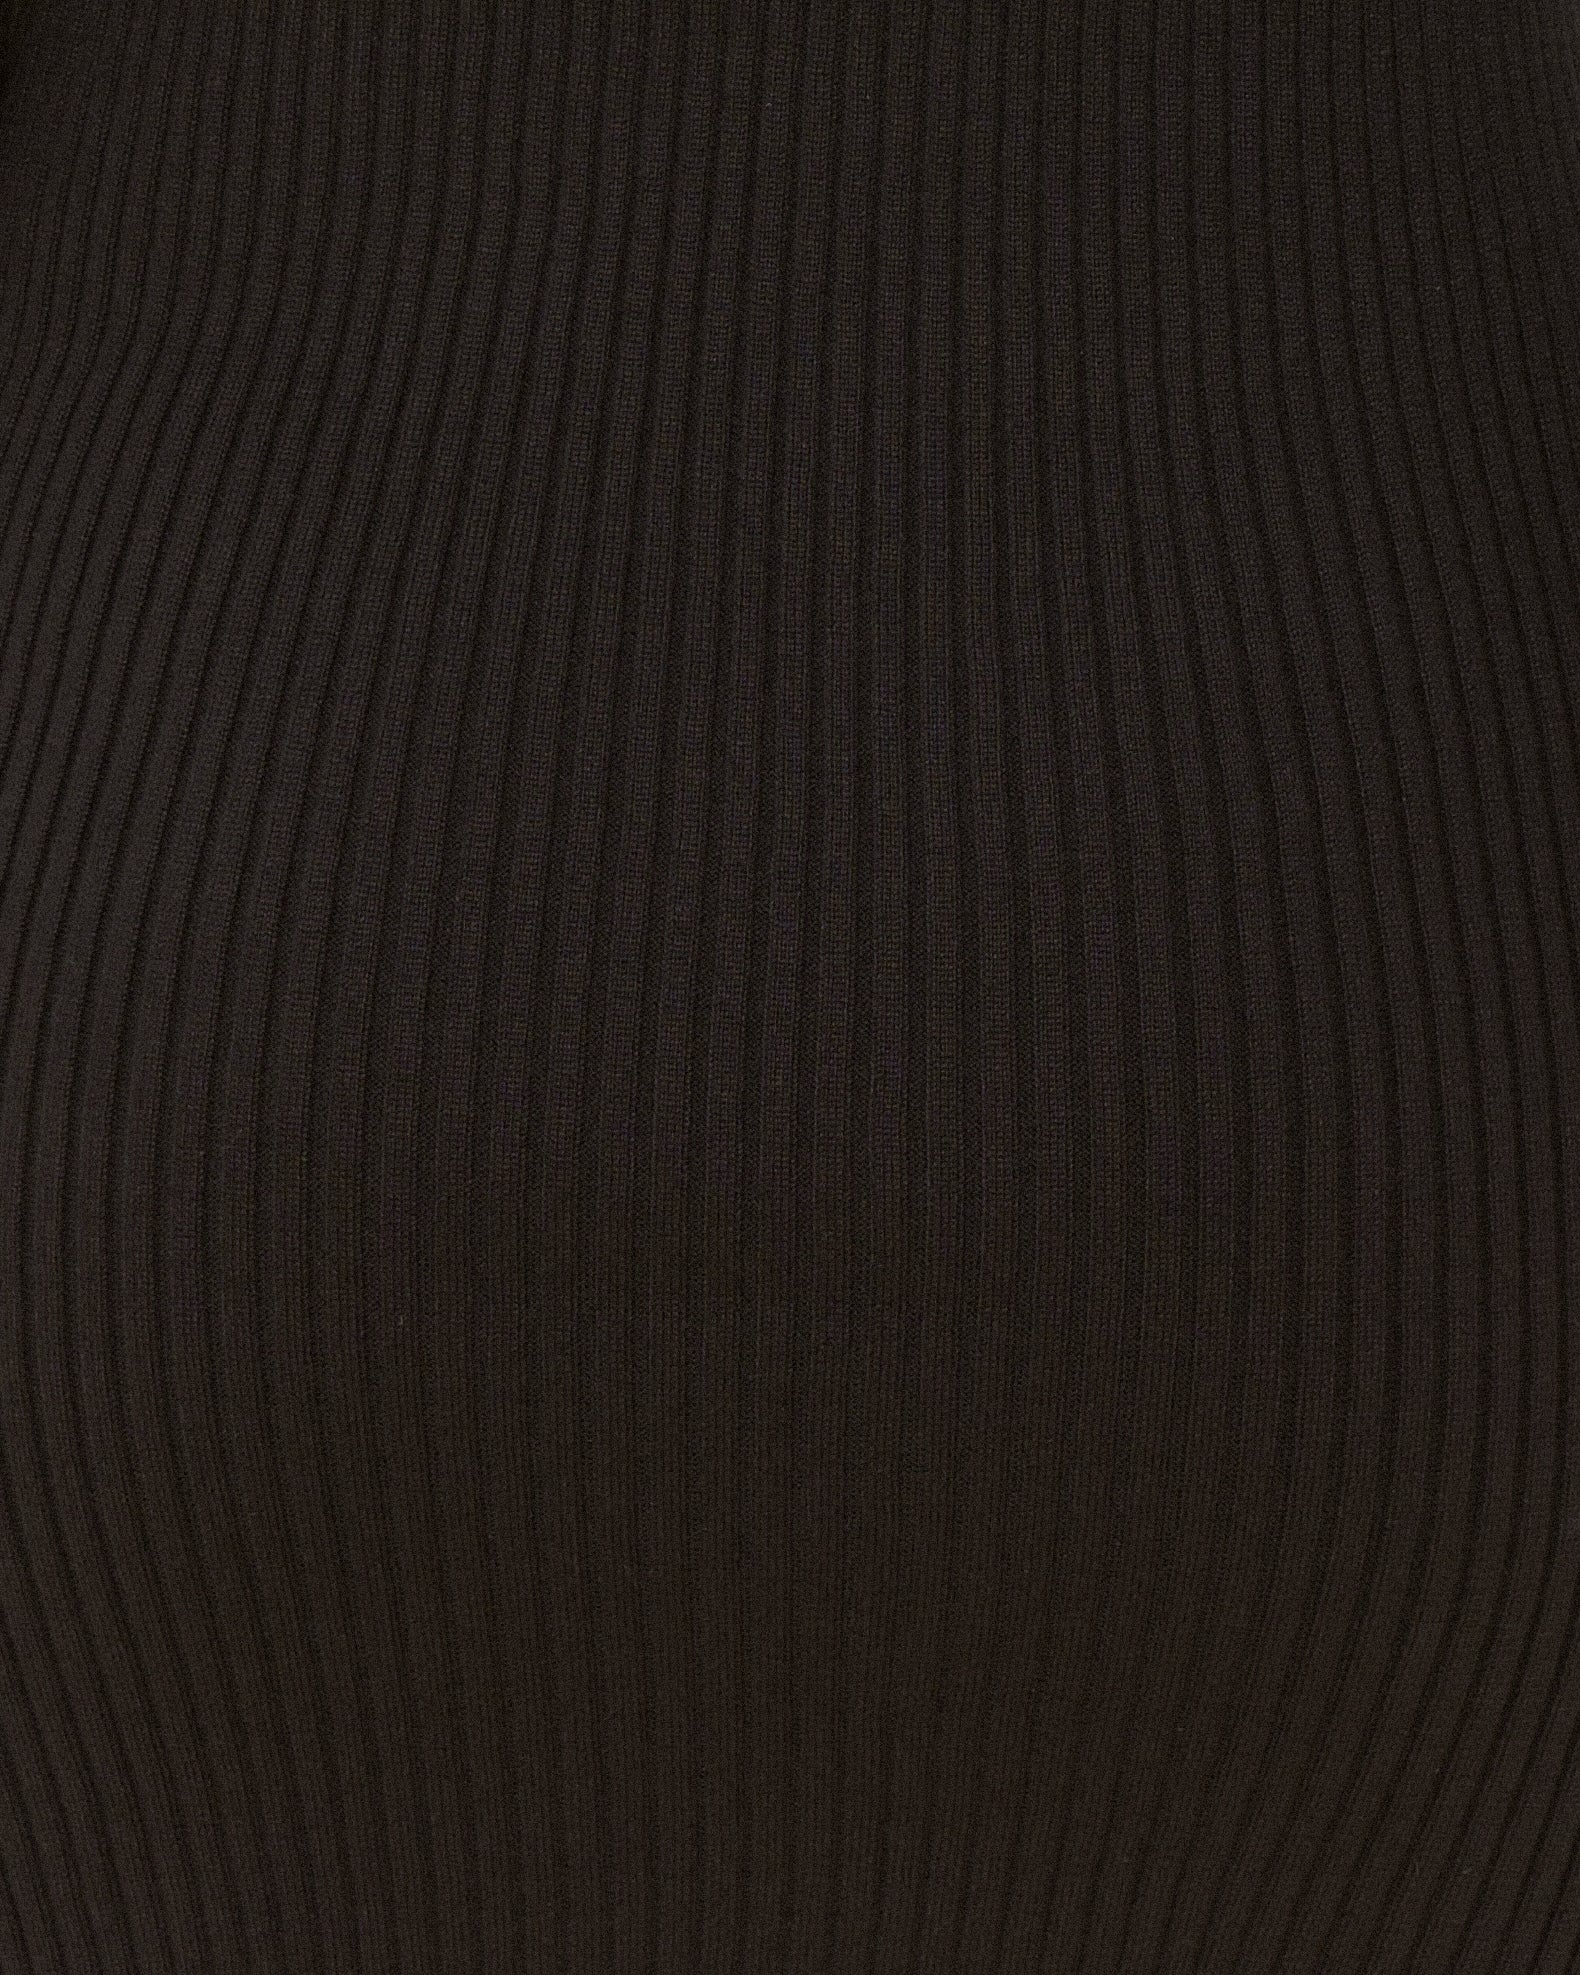 Cece Black Long Sleeve Collared Knit Mini Dress